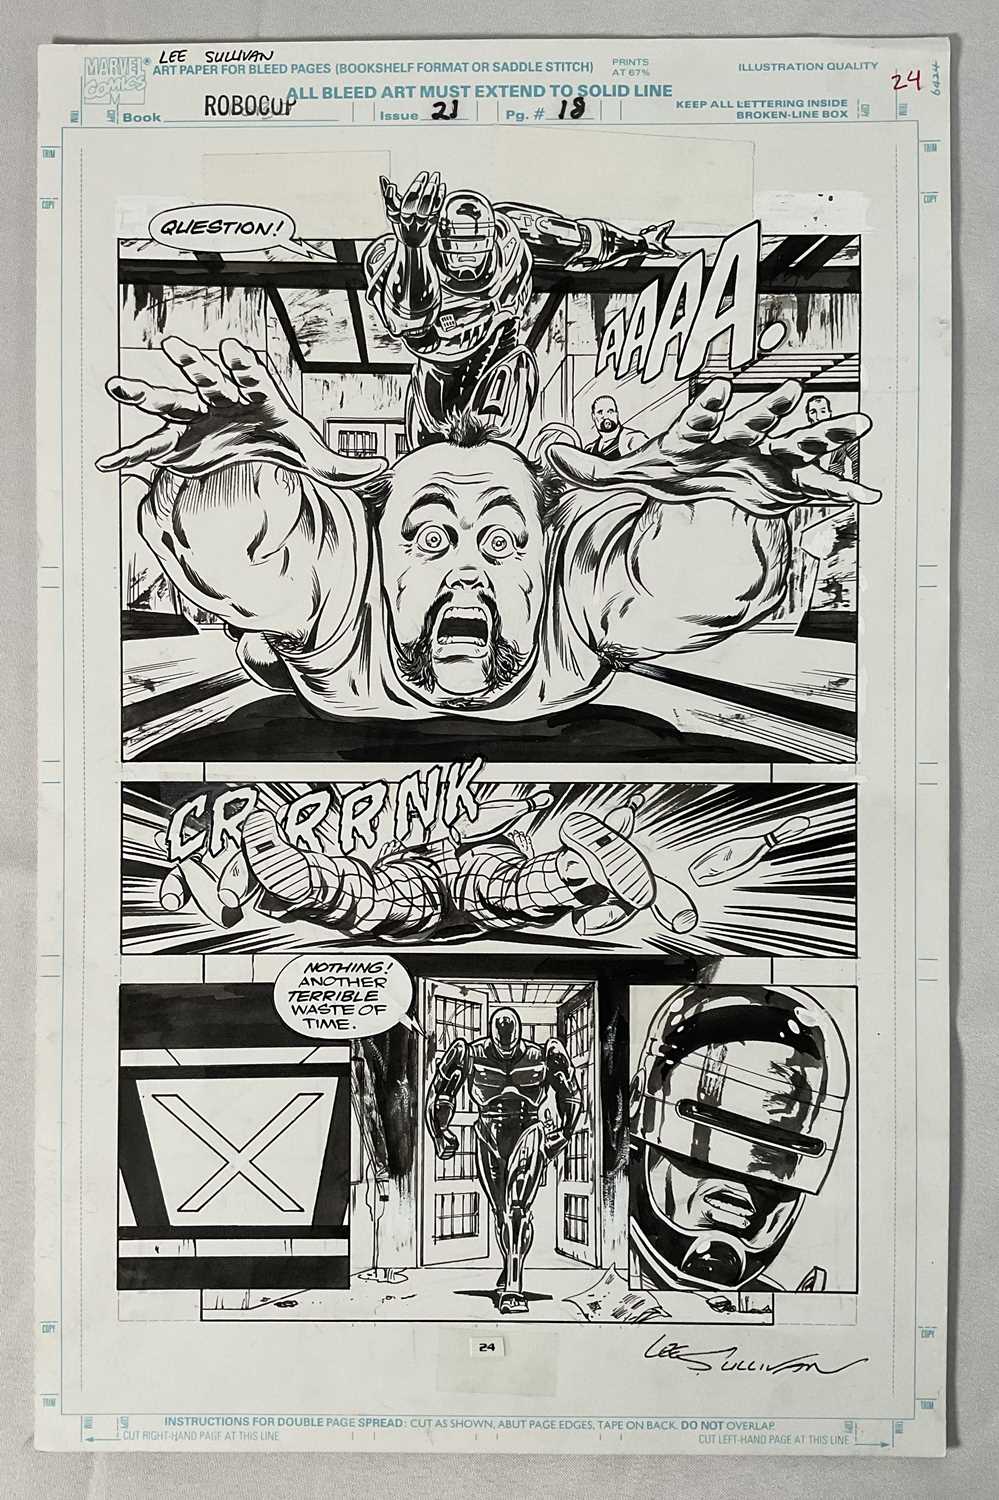 Original Comic Book Artwork by LEE SULLIVAN from ROBOCOP #21 (1991, Marvel Comics) page 18, graphite